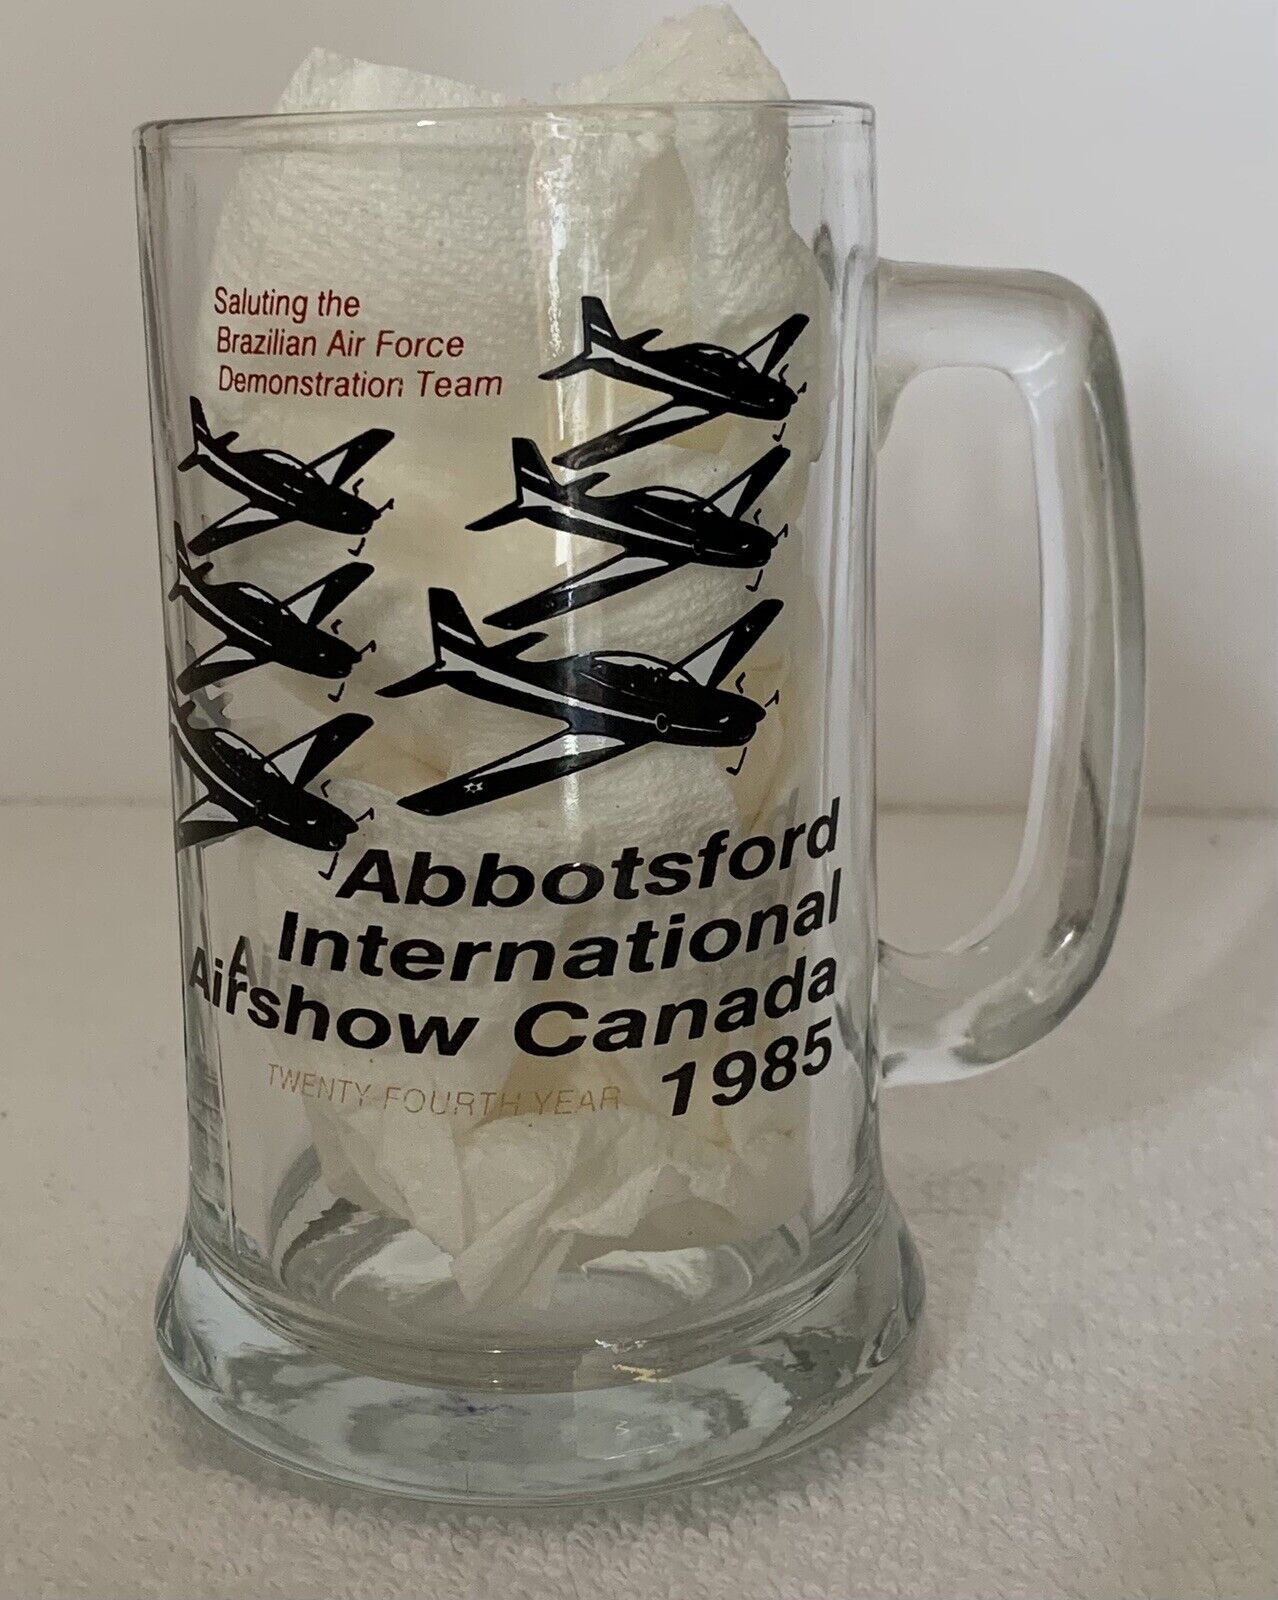 Brazilian Air Force Abbotsford International Airshow Canada 1985 glass mug